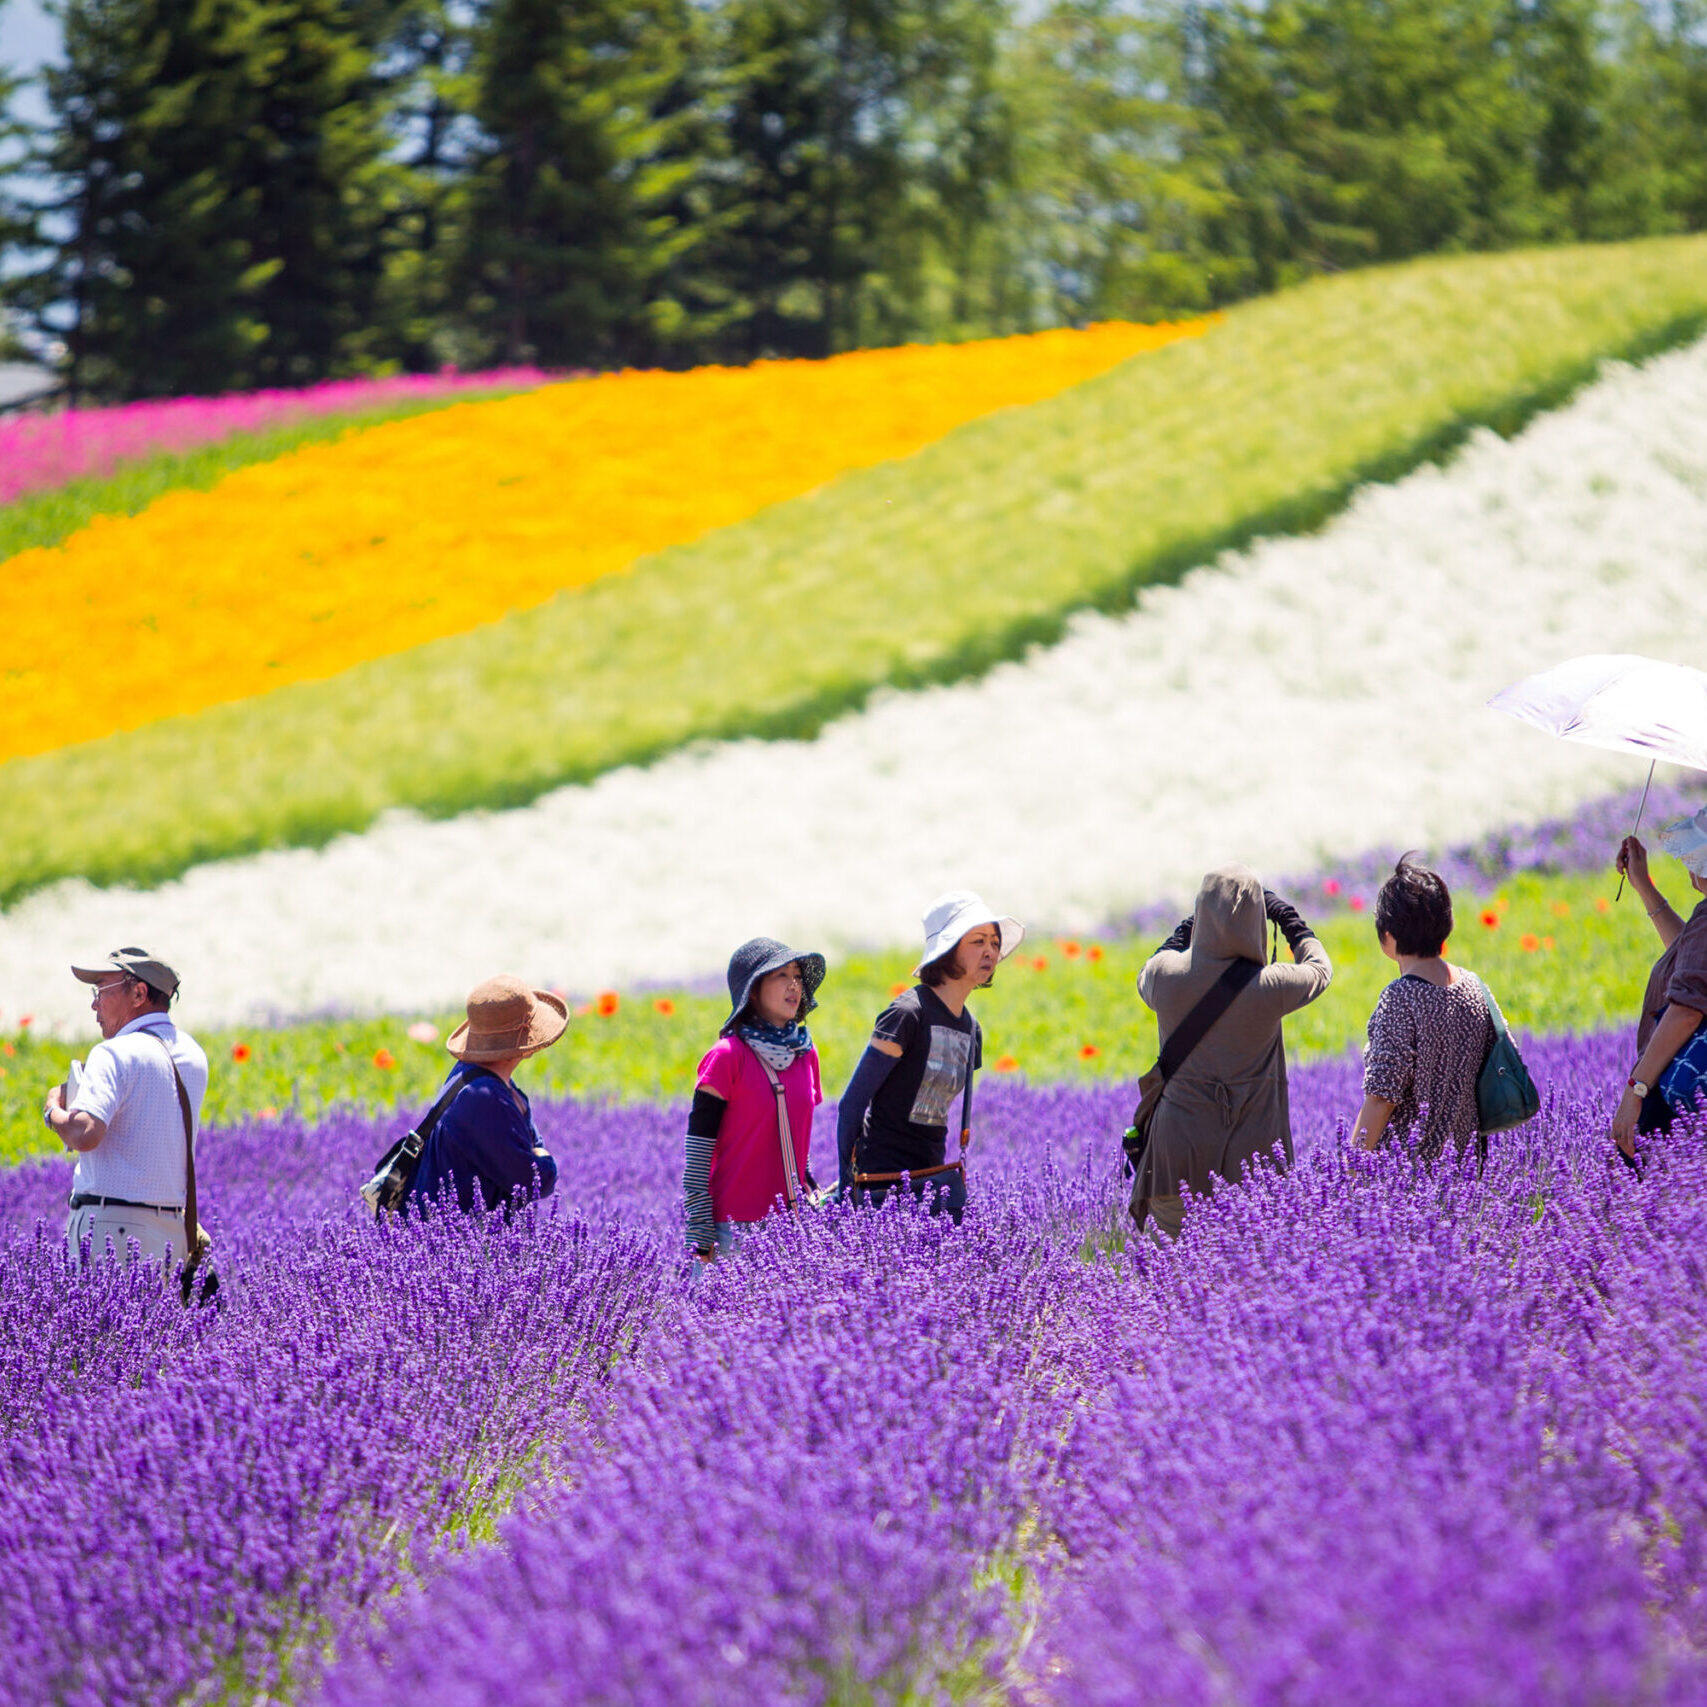 HOKKAIDO, JAPAN-JUL 17 : The landscape of flower garden in Hokkaido while a group of tourist enjoying with photography on Jul 17, 2015.